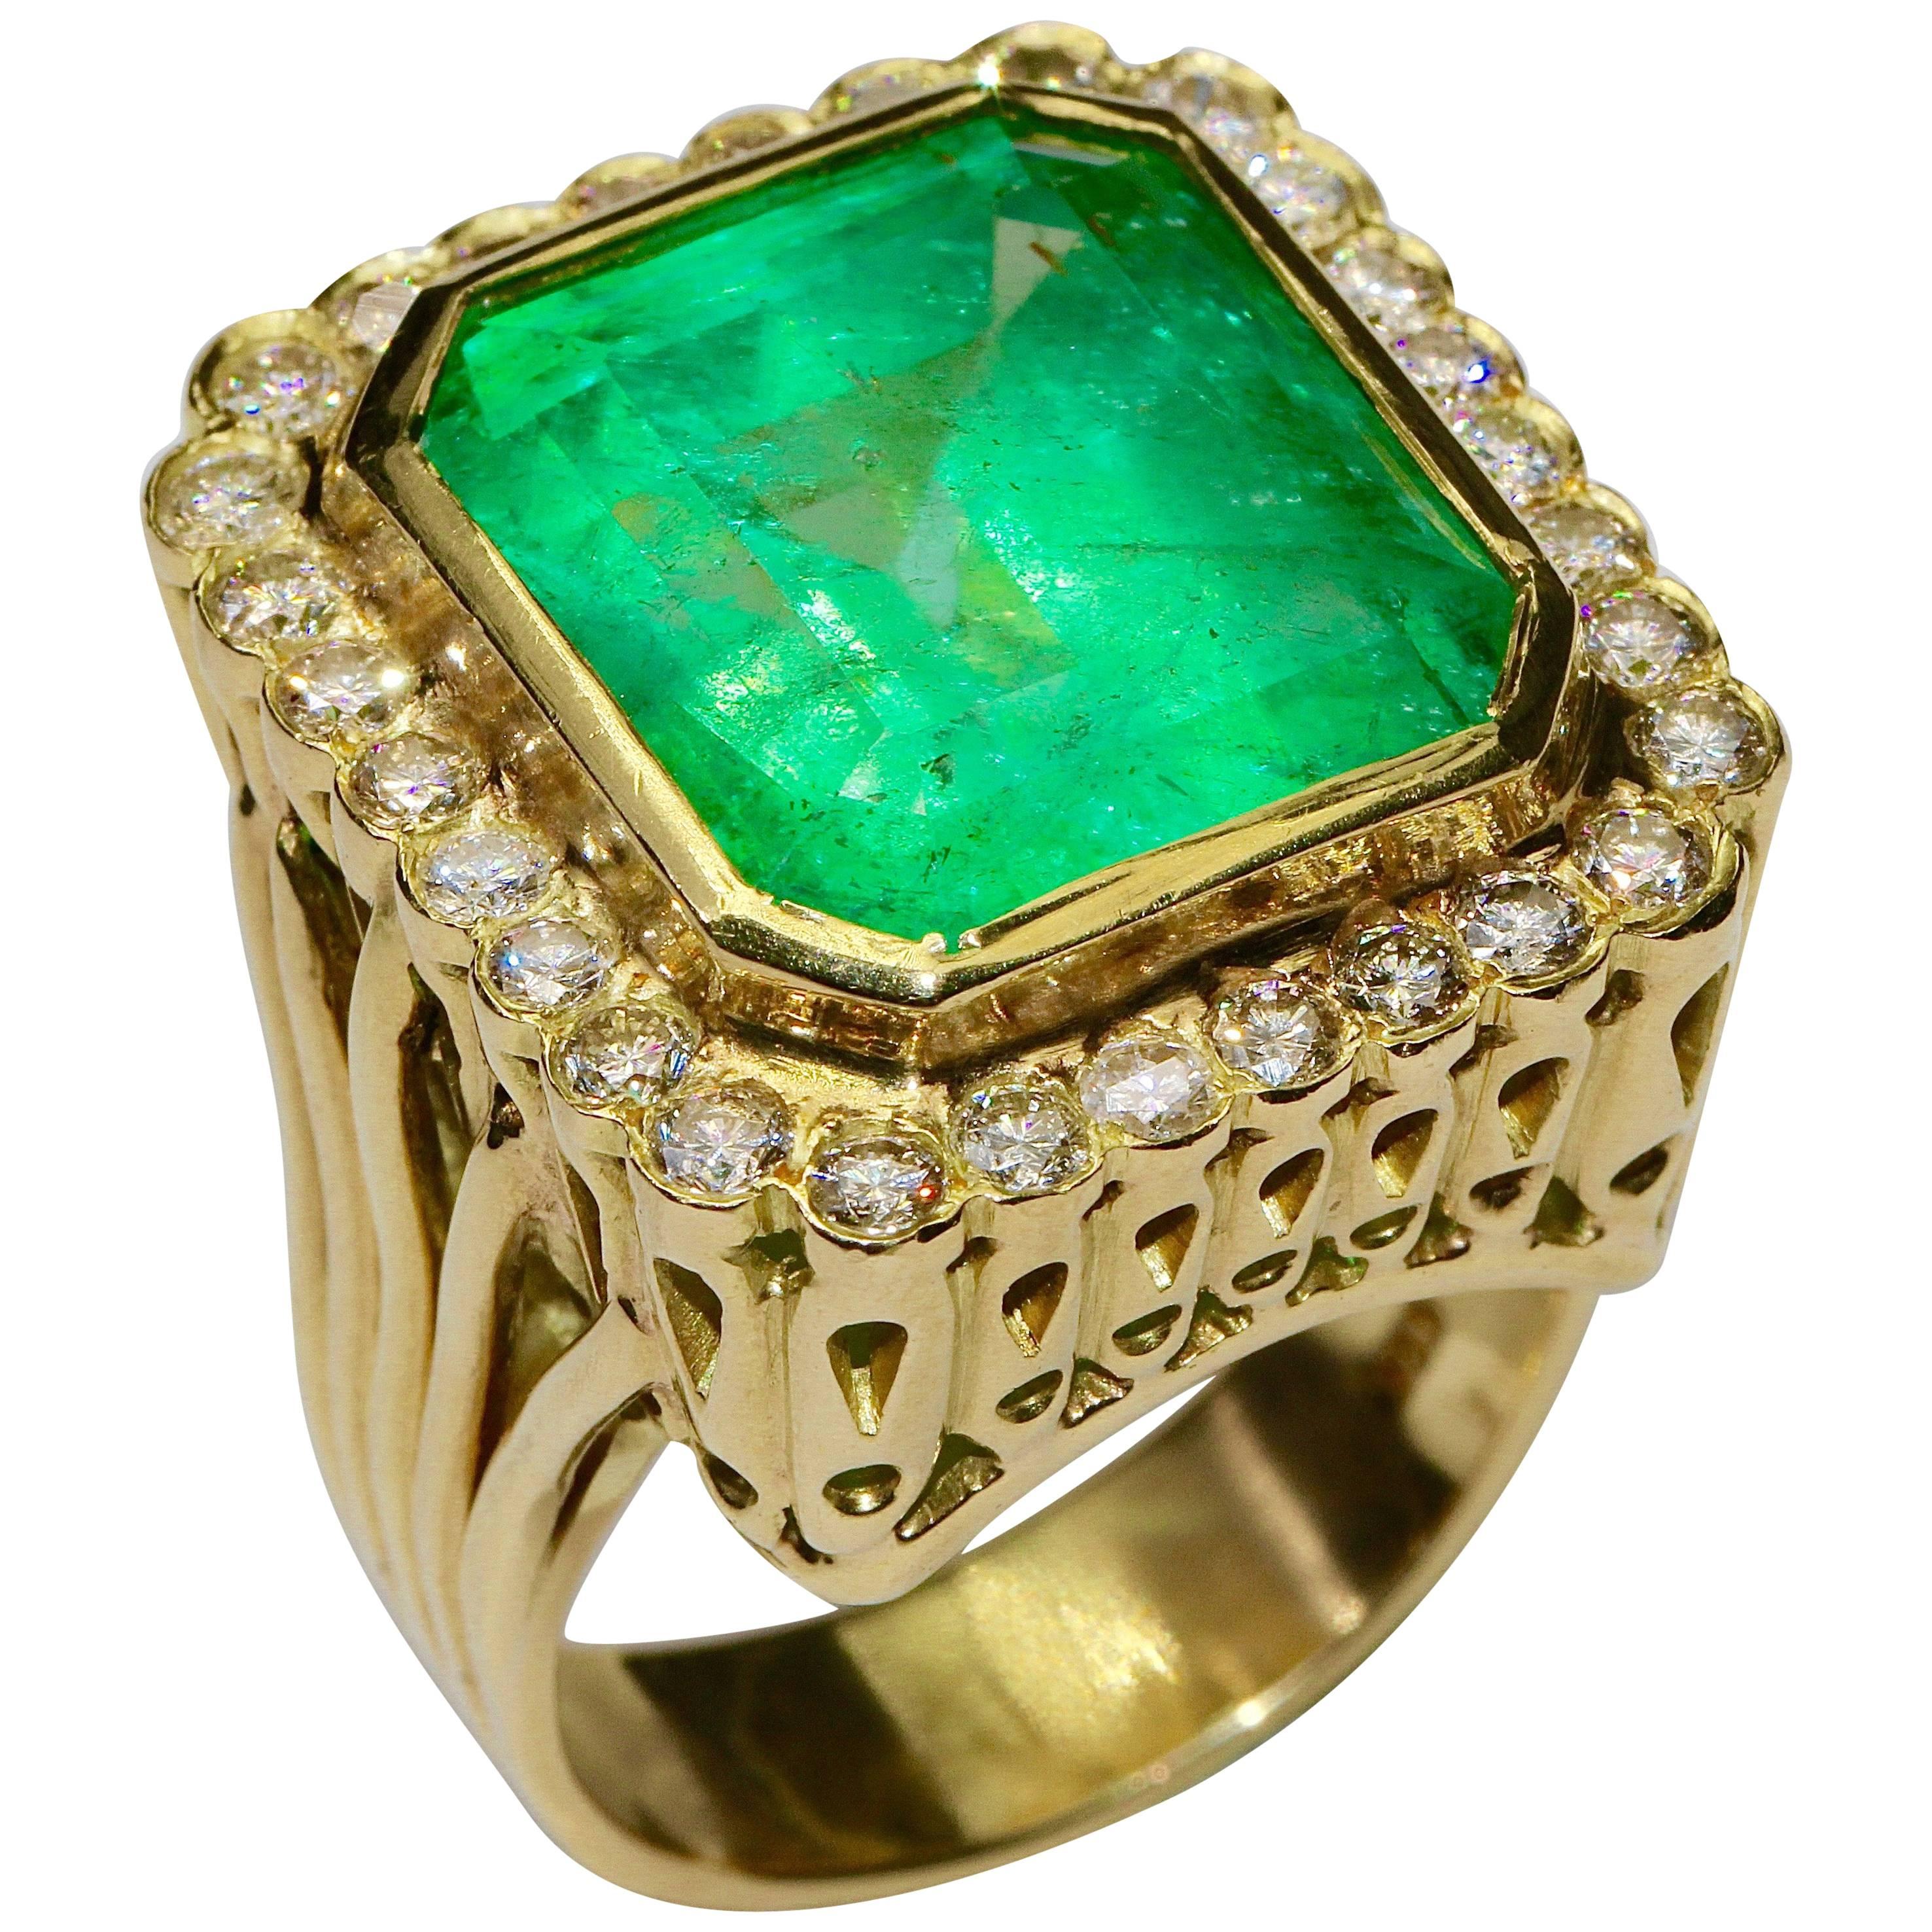 24 Carat Gold Ring Sale, 56% OFF | www.ingeniovirtual.com